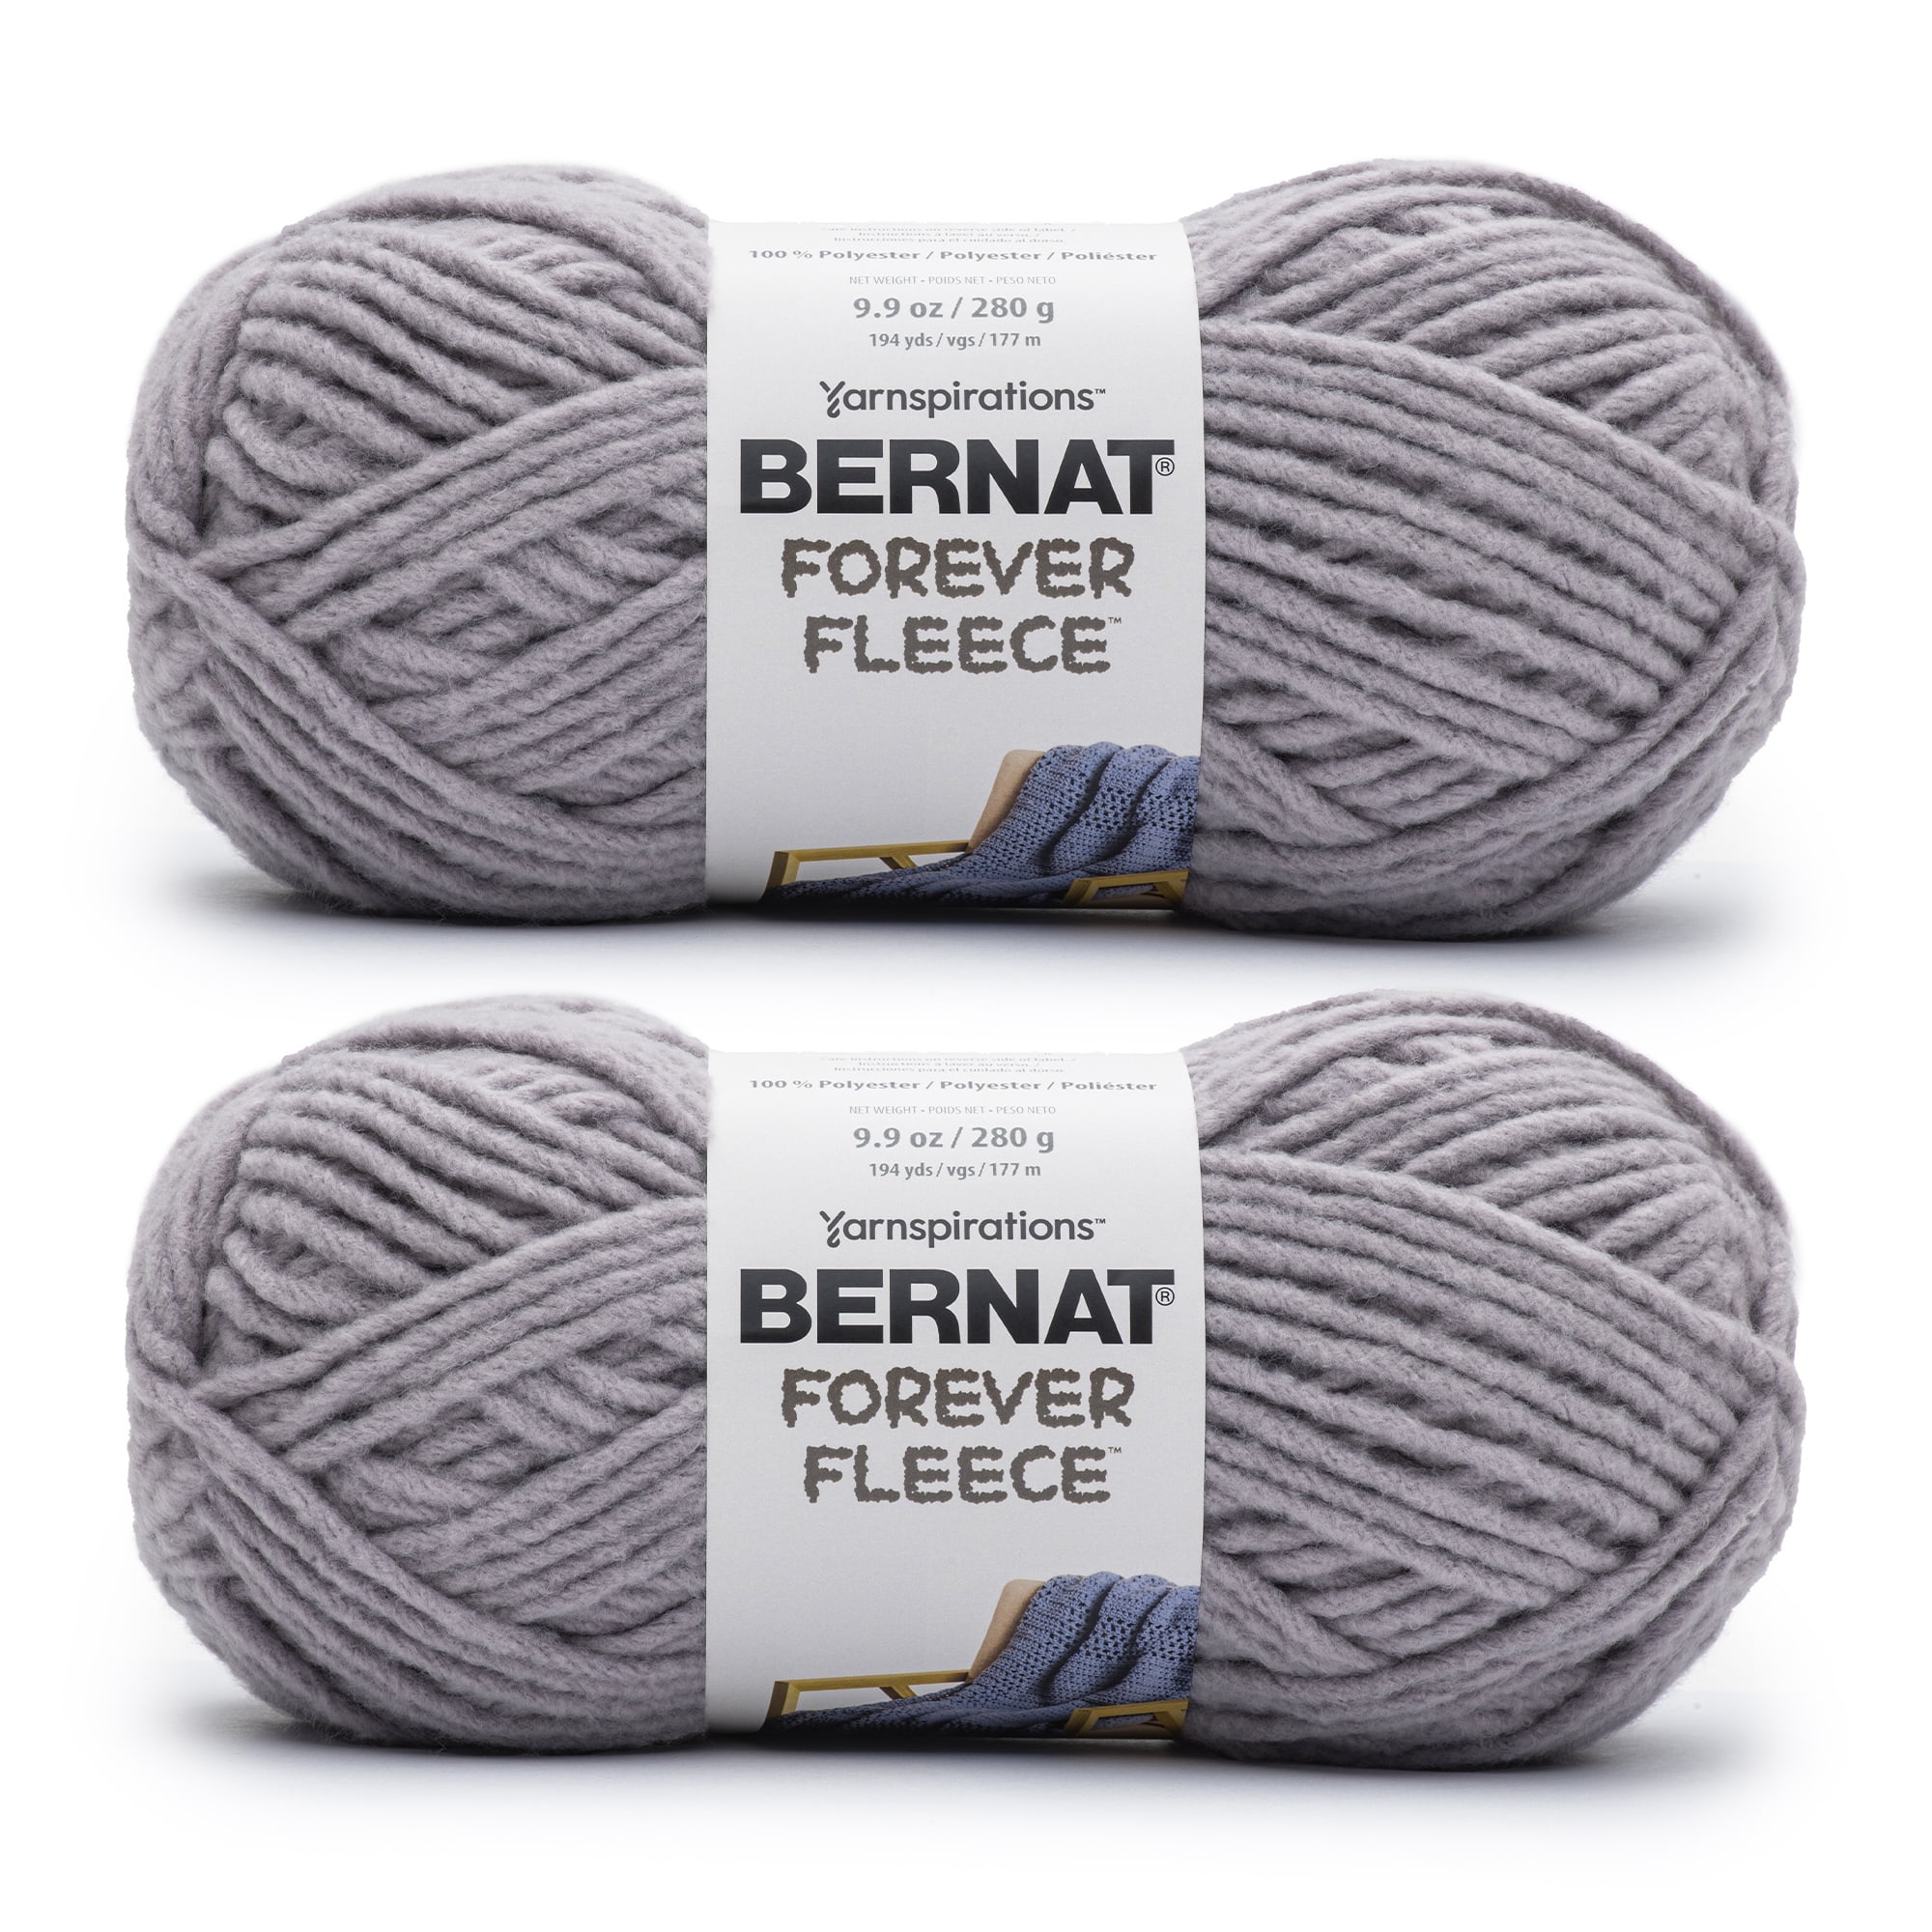 Bernat Forever Fleece Yarn Rose Hip 166061-61003 (2-Skeins) Same Dye Lot  Weight S Bulky #6 Soft 100% Polyester Bundle with 1 Artsiga Craft Bag